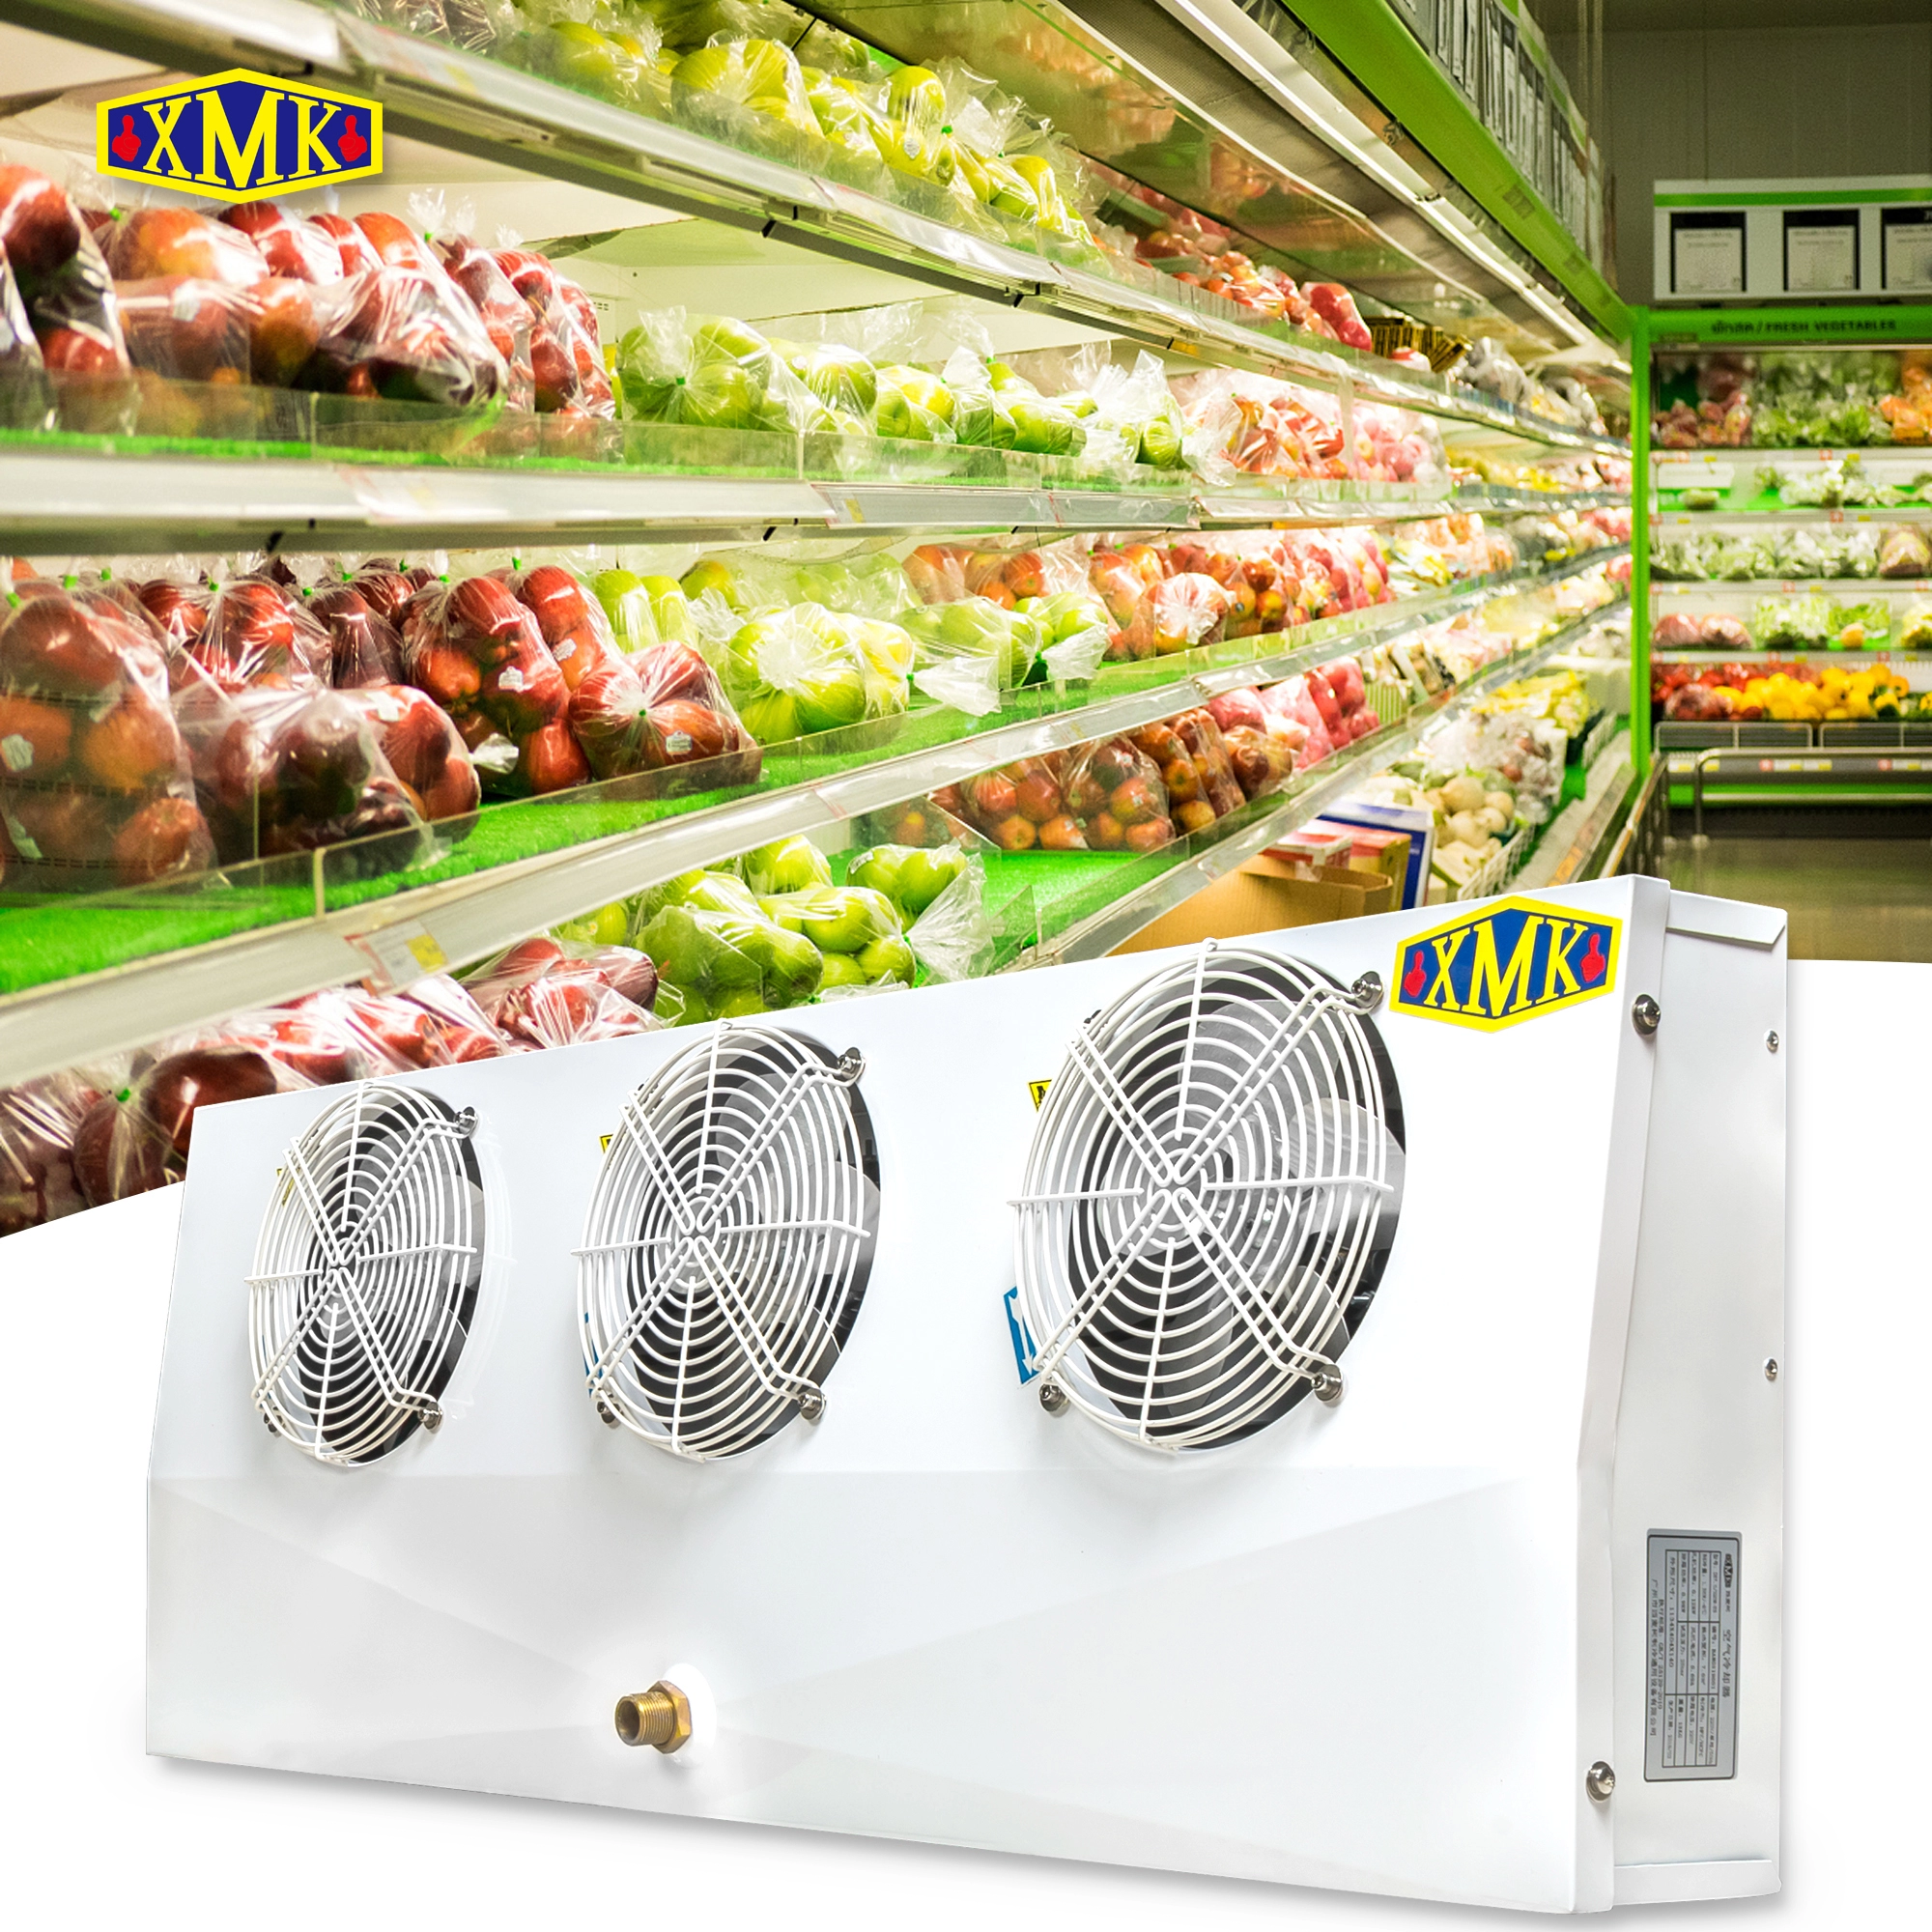 DE serie supermarkt koude opslag koelkast verdampers